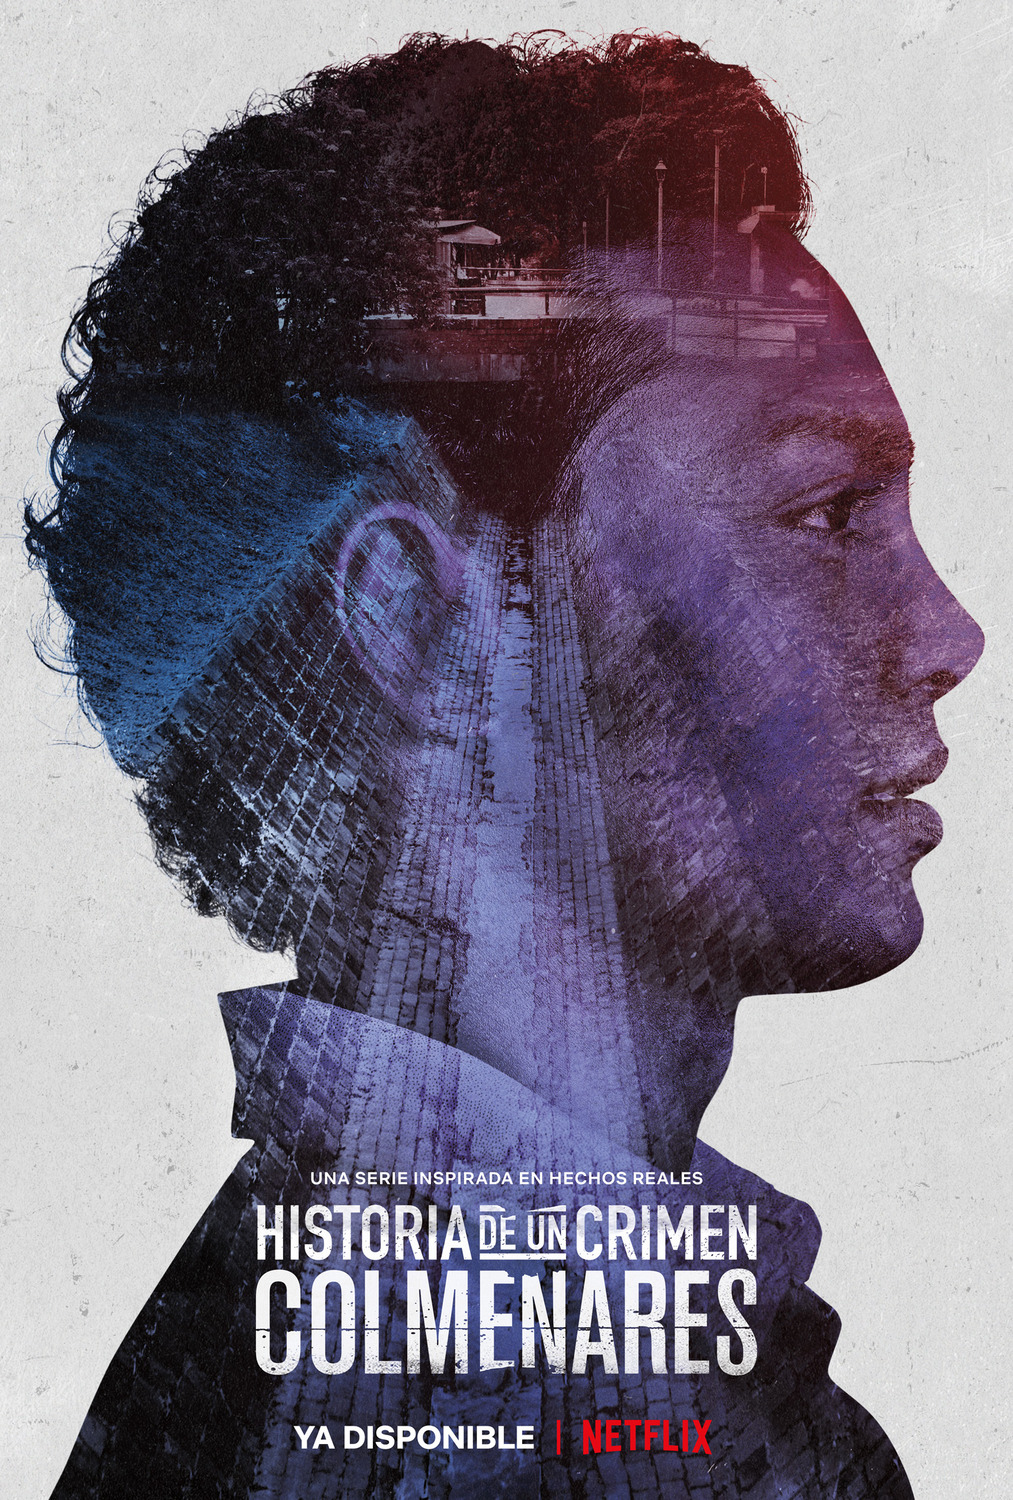 Extra Large TV Poster Image for Historia de un crimen: Colmenares 